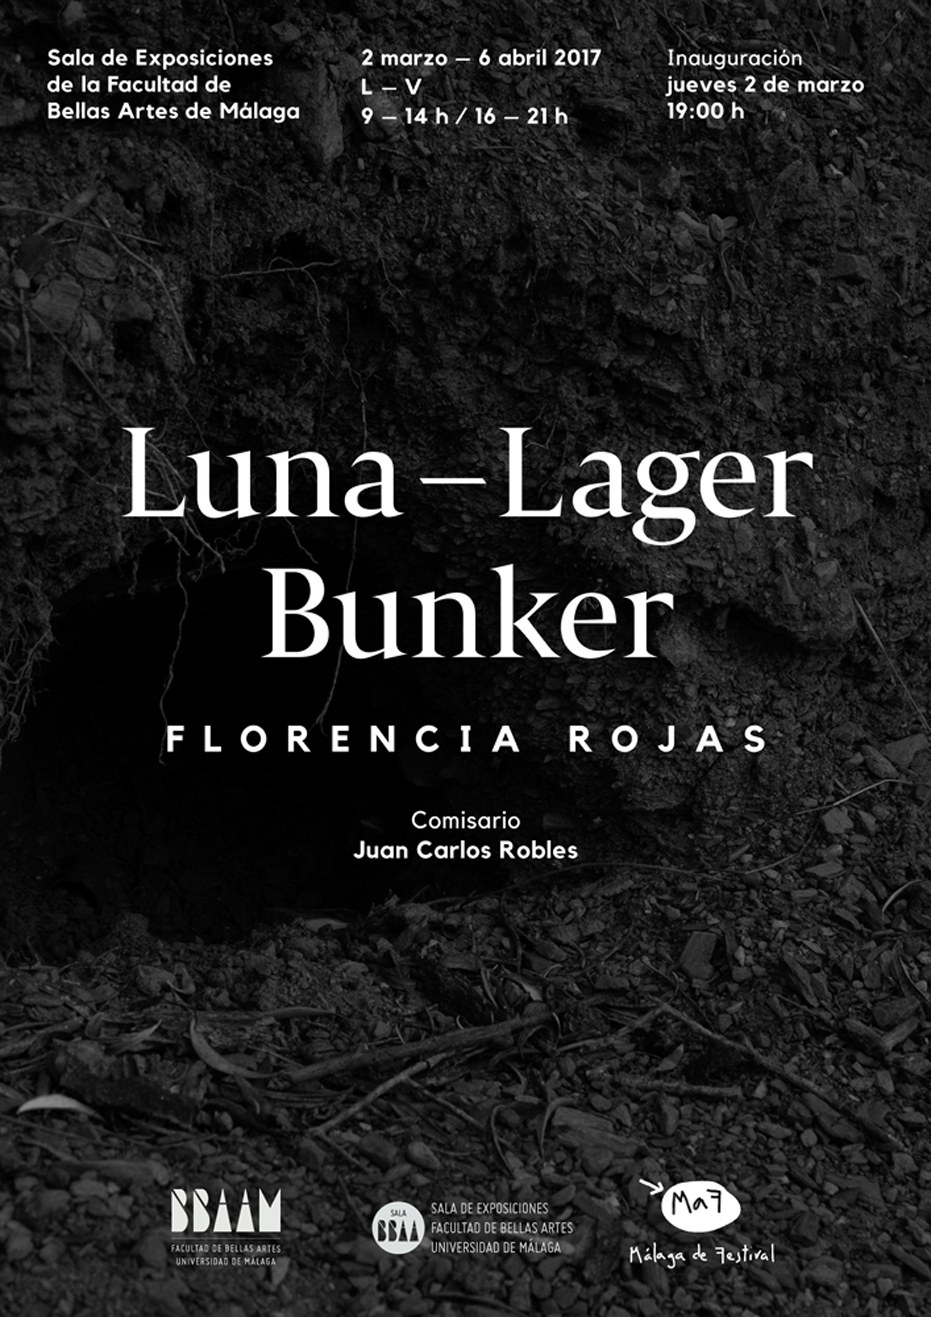 Exposición Luna-Lager Bunker, de Florencia Rojas